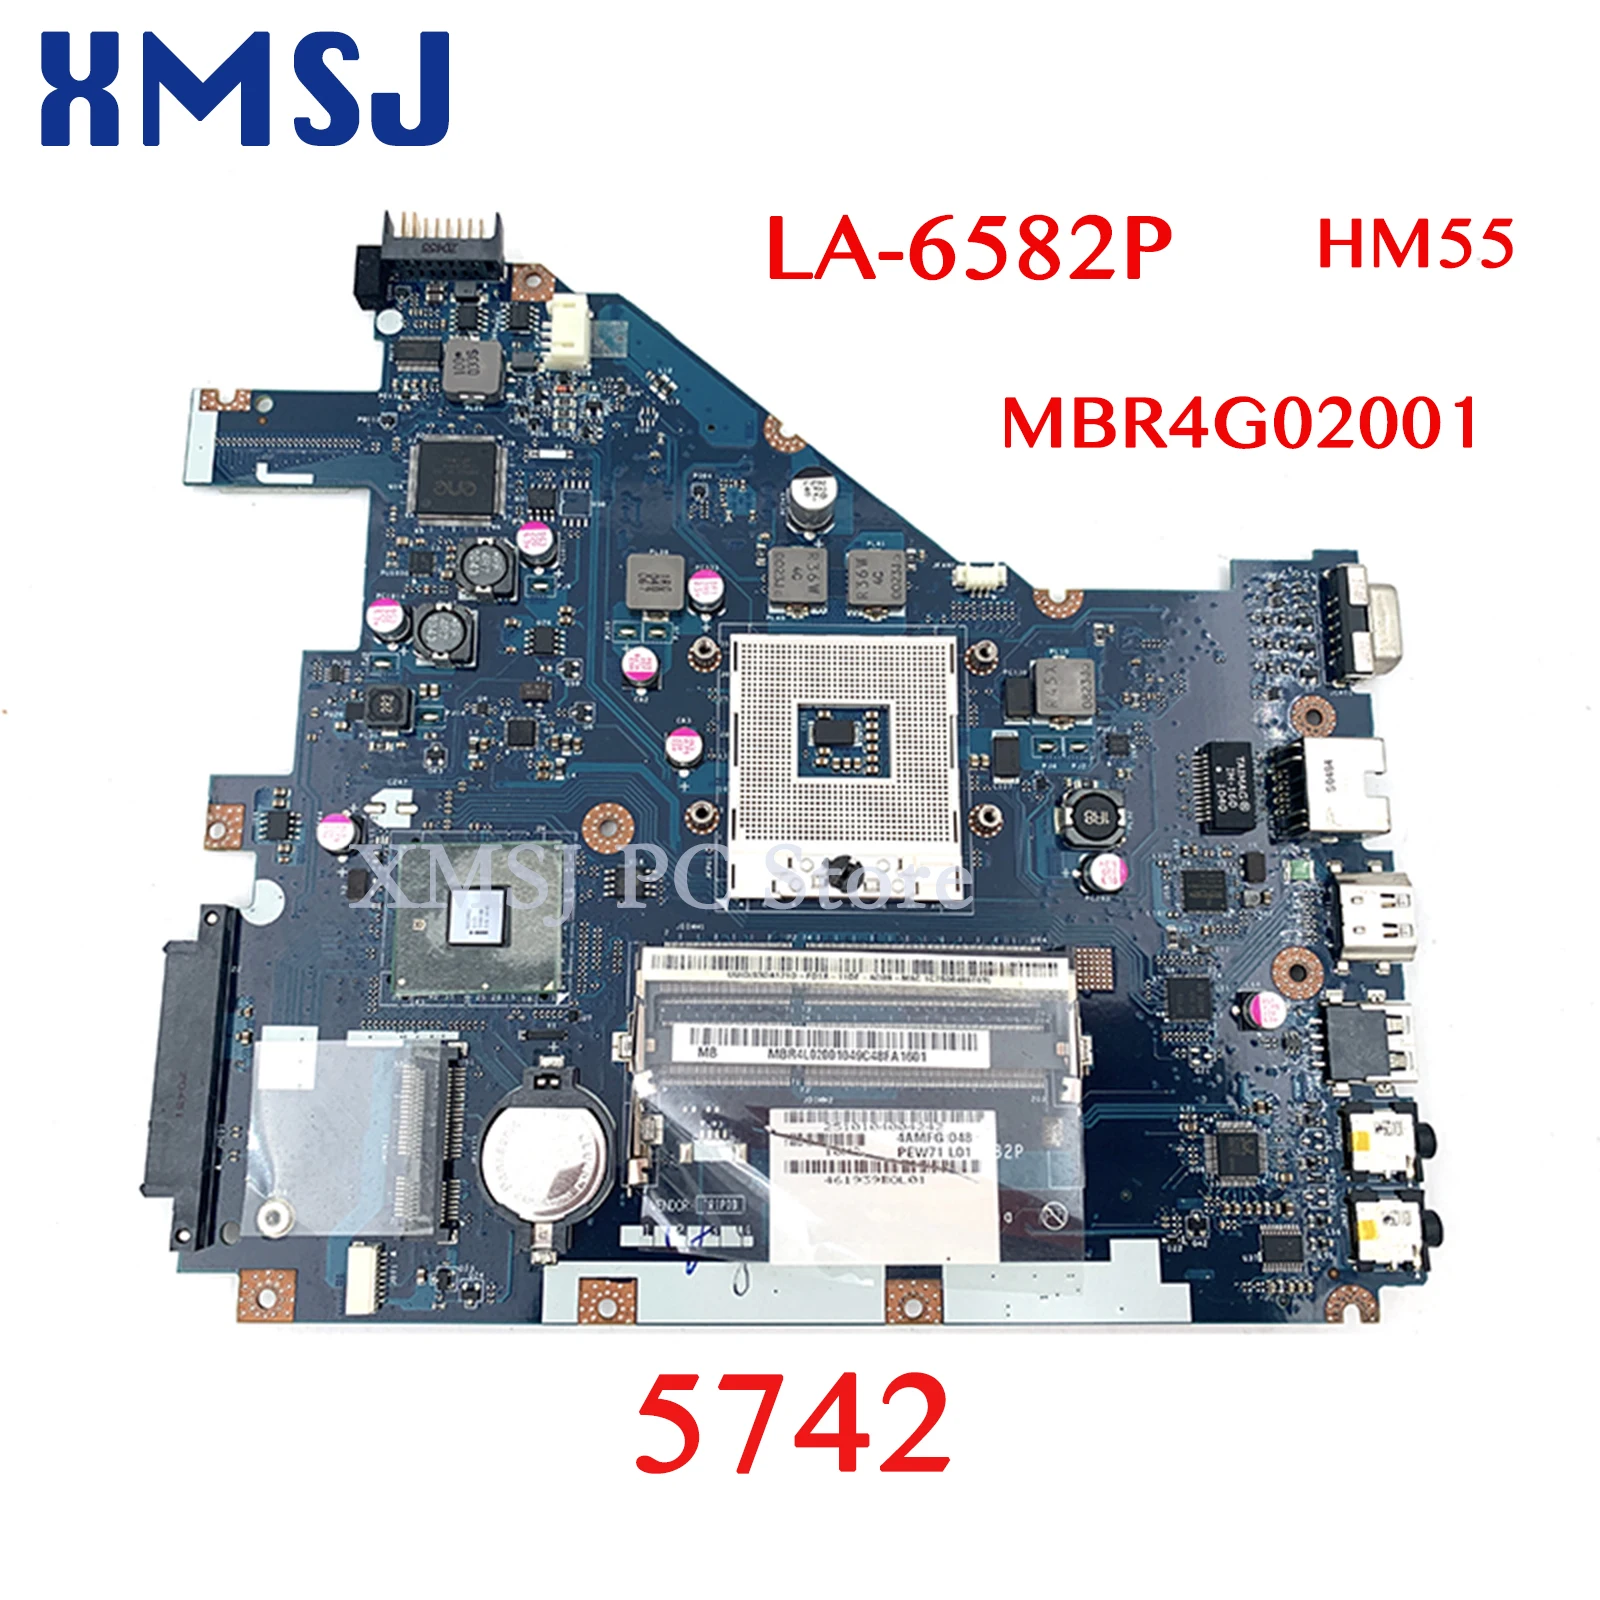 

XMSJ PEW71 LA-6582P MBR4L02001 MB.R4L02.001 MBRJW02001 Main board for ACER aspire 5742 laptop motherboard HM55 free CPU 1 order